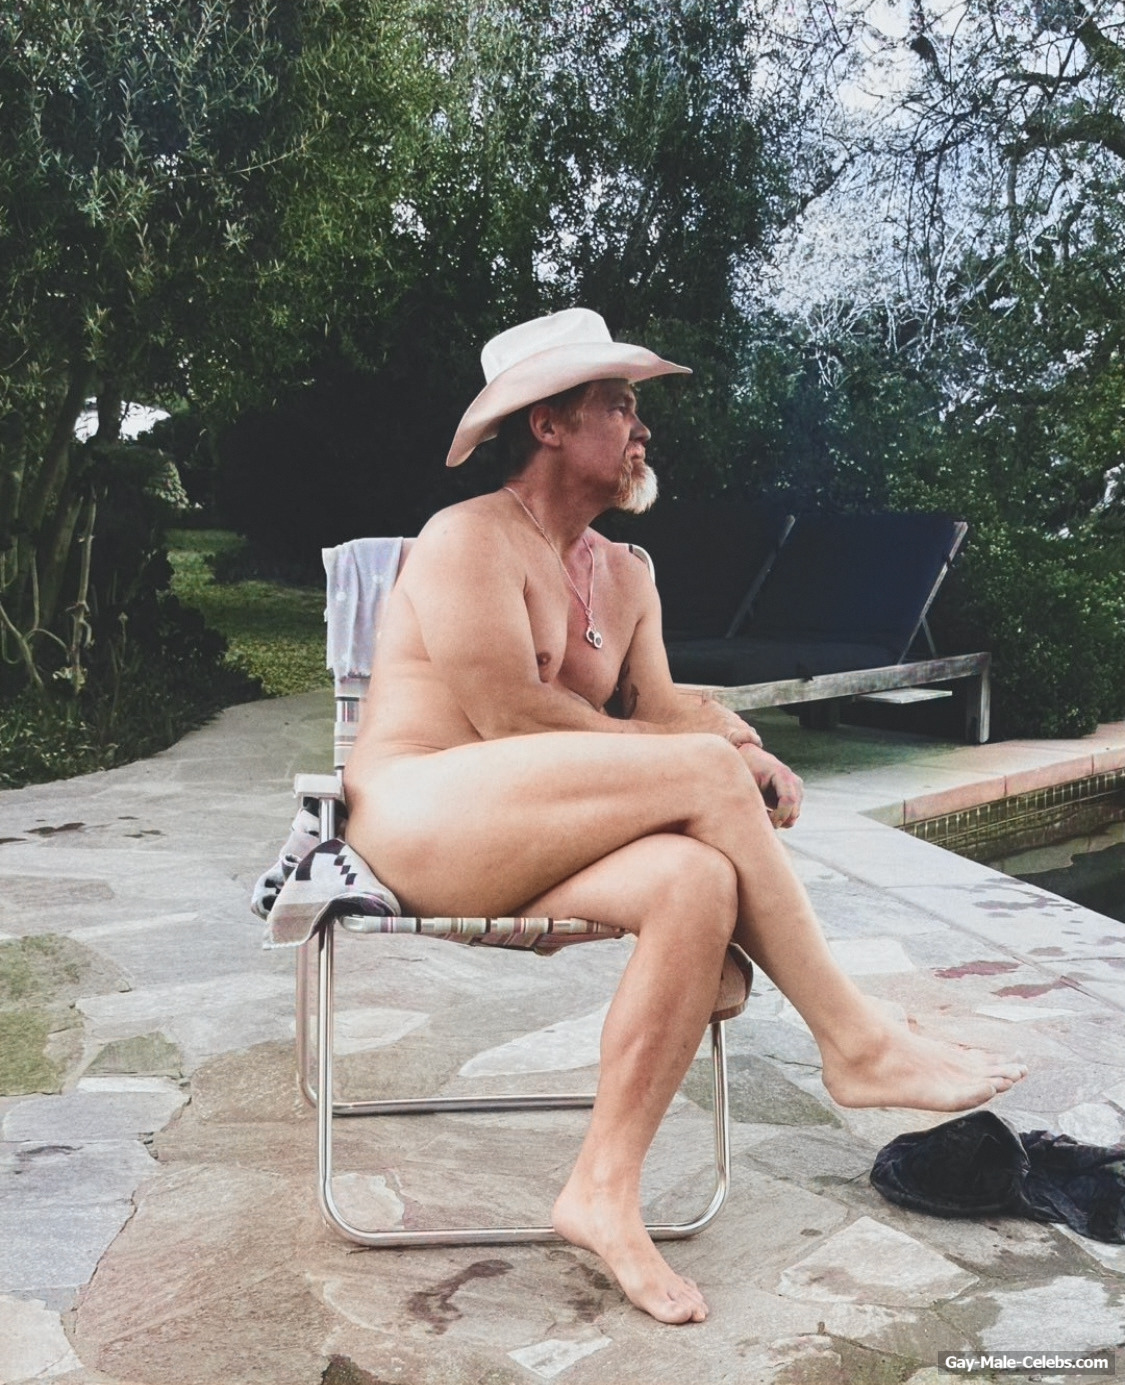 Josh Brolin nudes